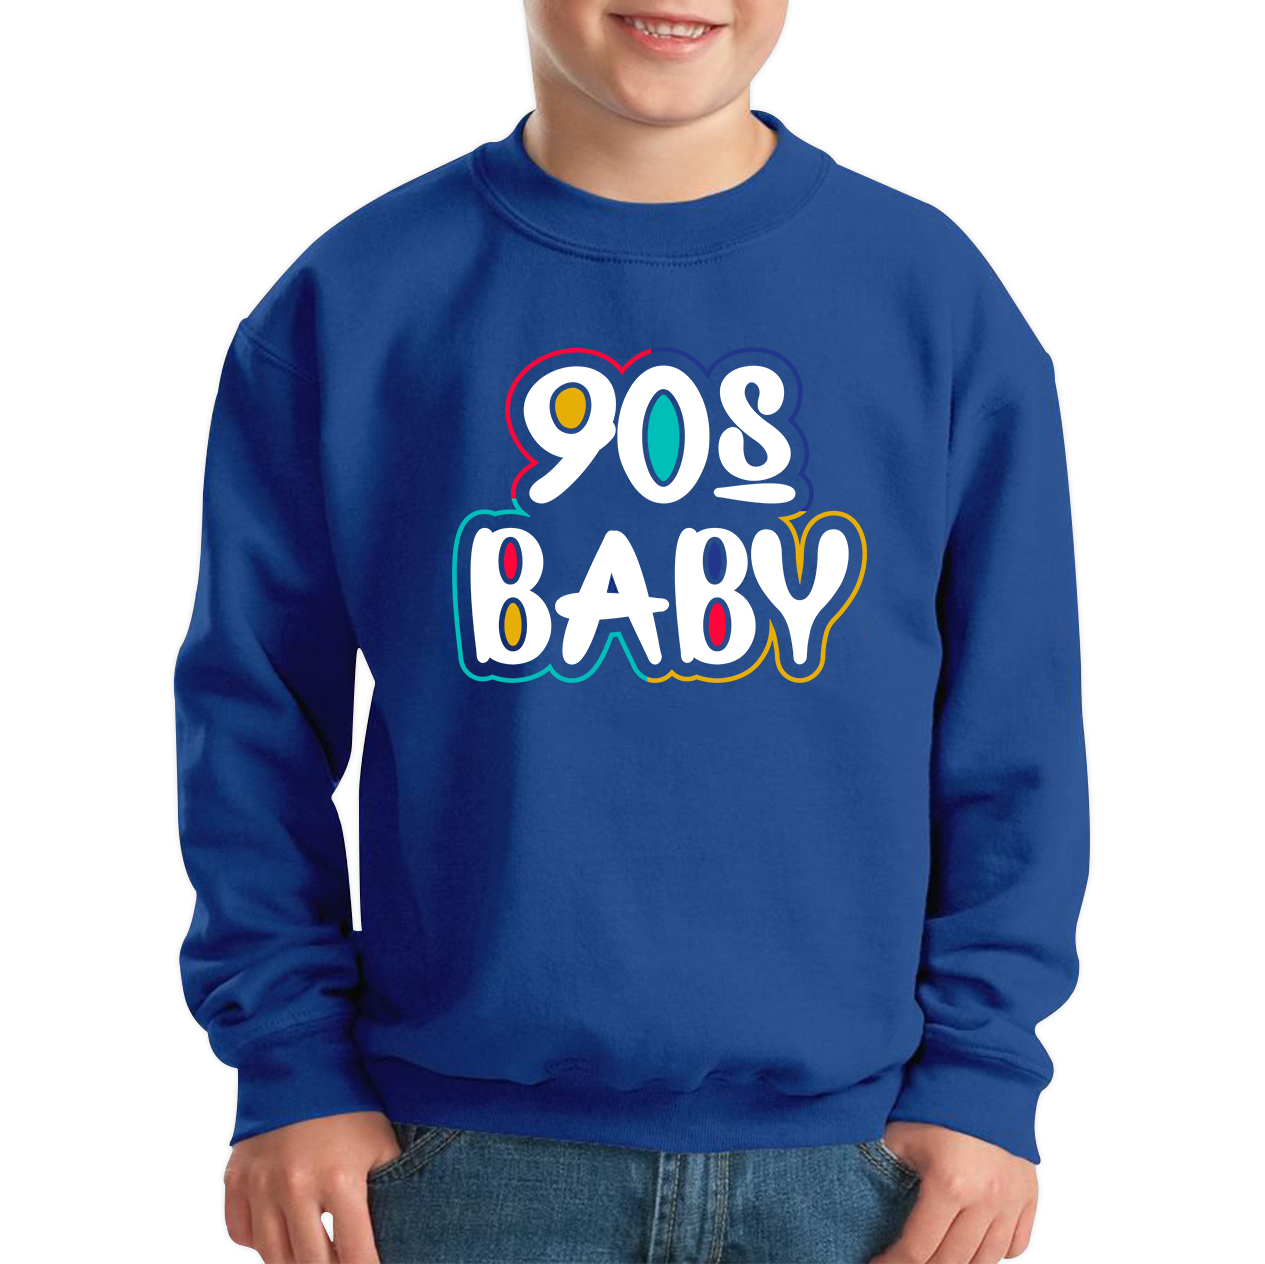 90s Baby Jumper Awesome cool 90's baby fashion Vintag Funny Joke Novelty Design Kids Sweatshirt